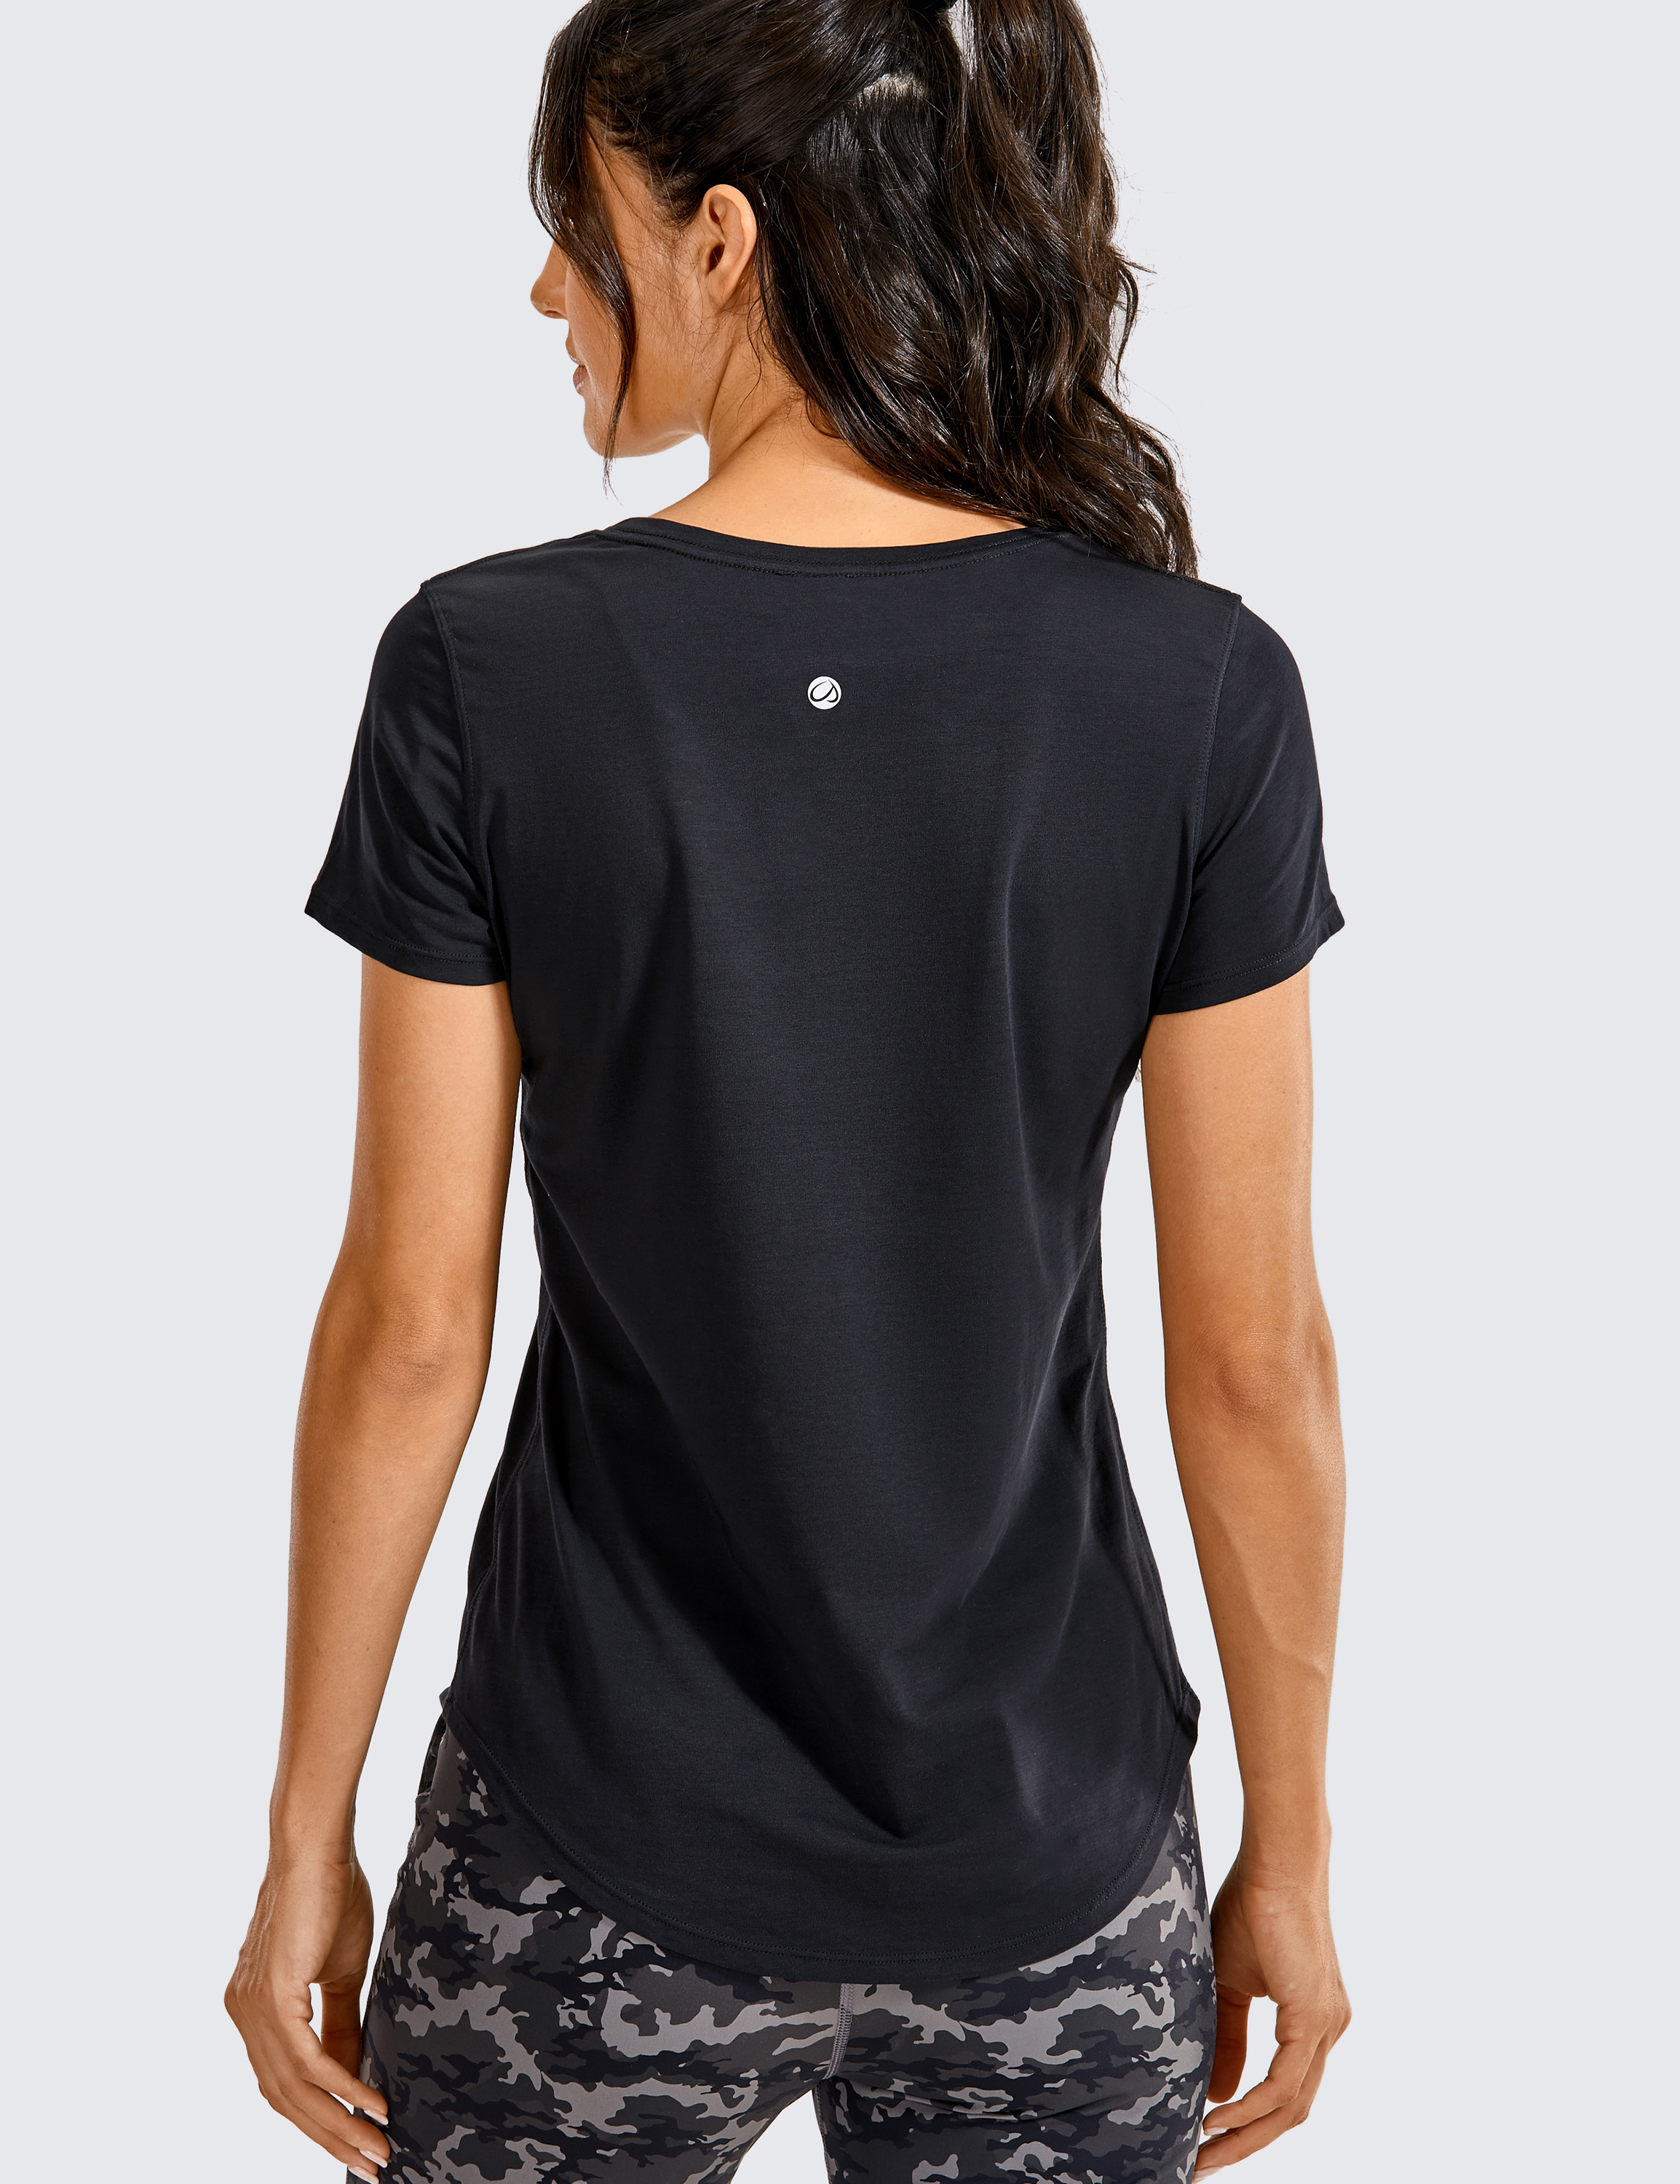 CRZ YOGA Pima Cotton Women Short Sleeve T-shirt Workout Shirt Yoga